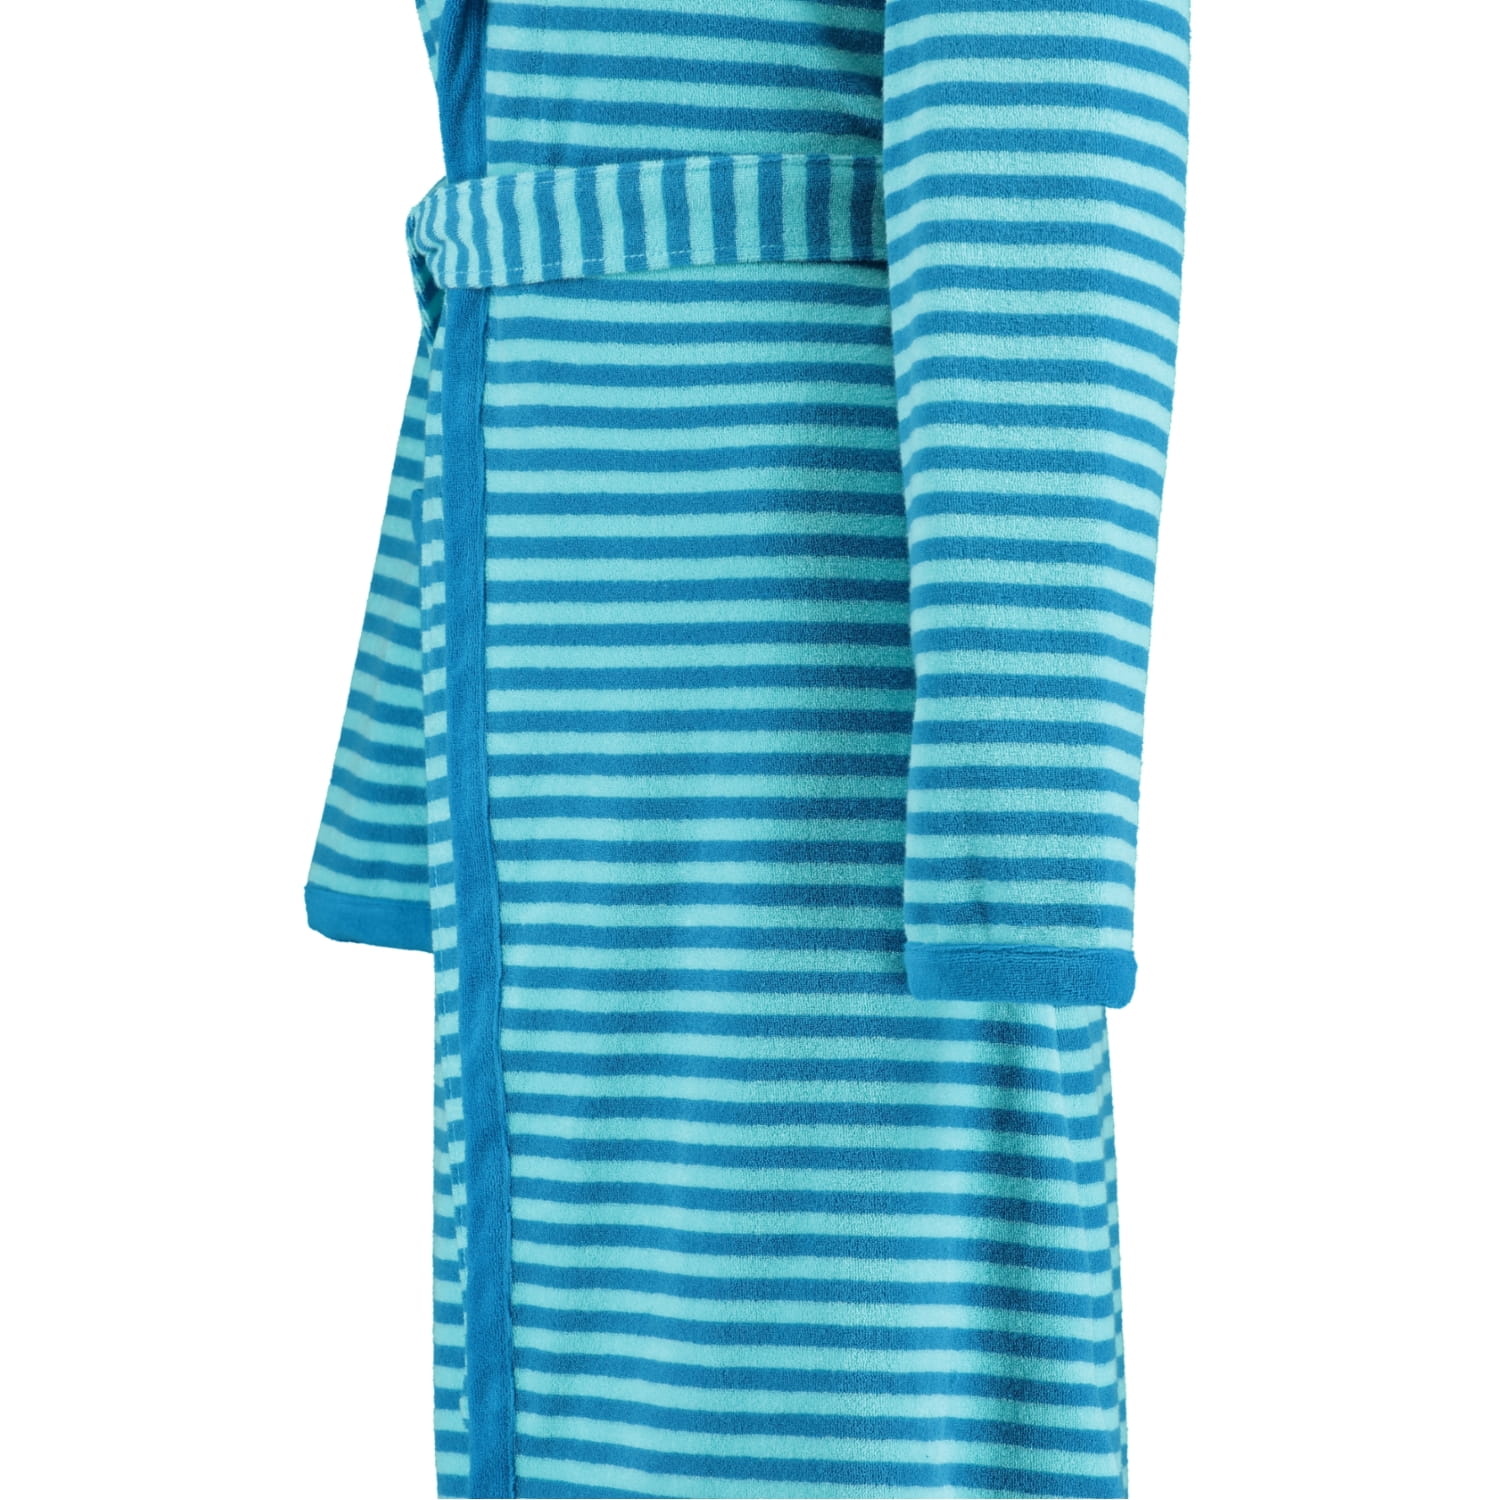 Esprit Damen 002 - Kapuze | Striped Bademantel Hoody Damen Farbe: | - L Bademantel turquoise